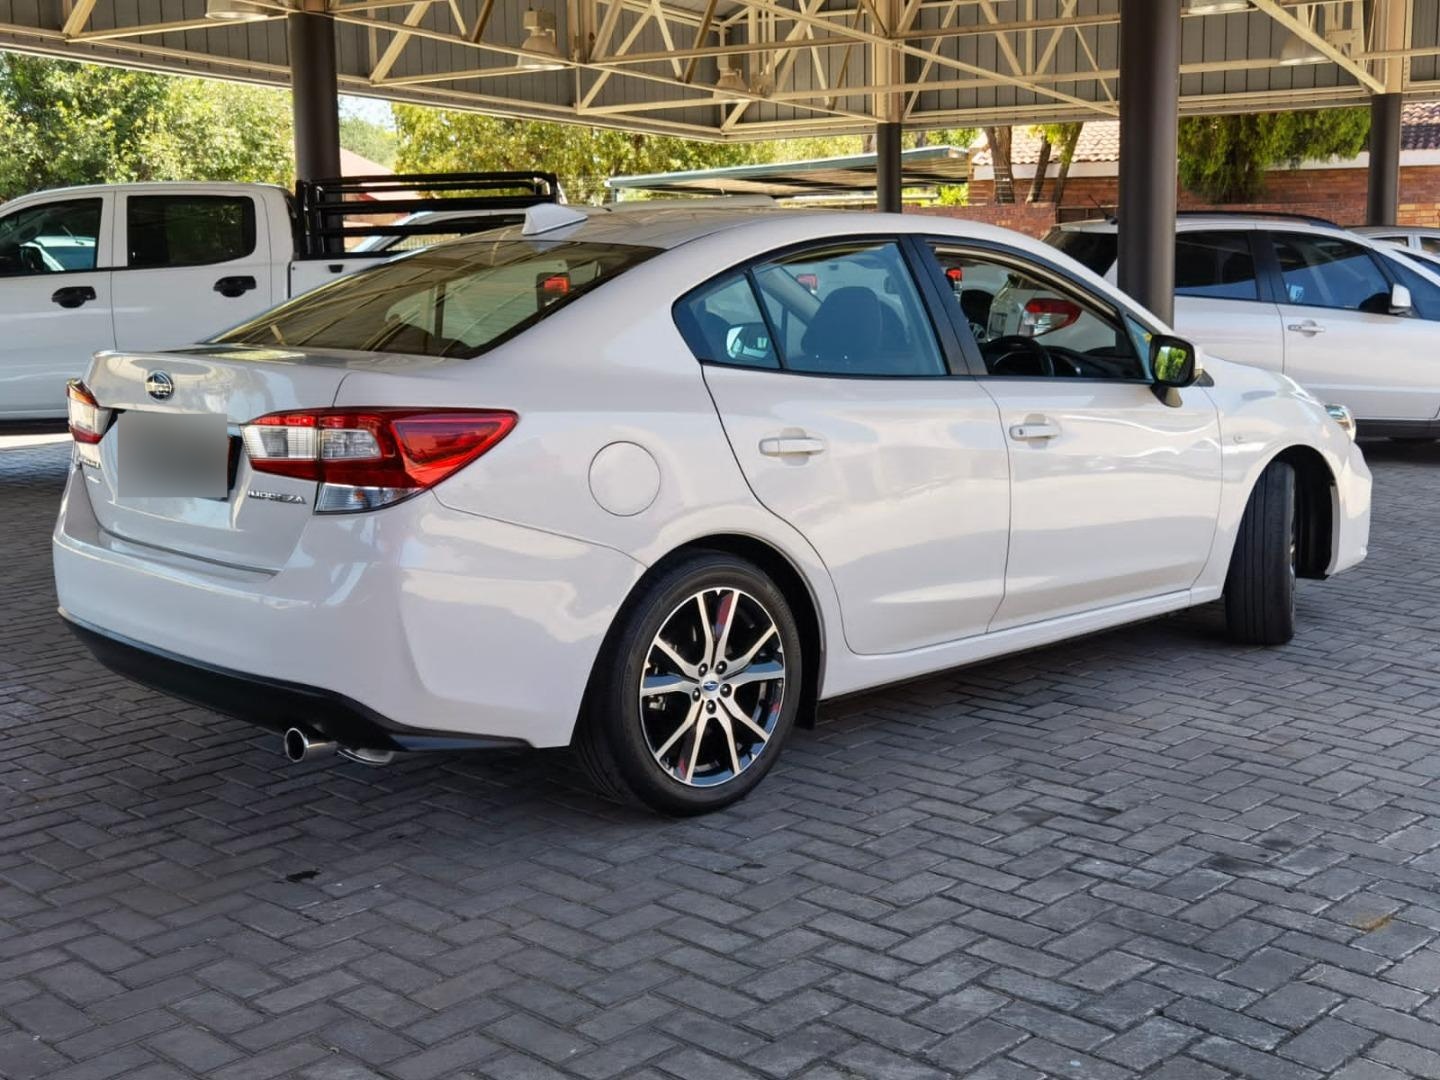 2019 Subaru Impreza rear and side view 